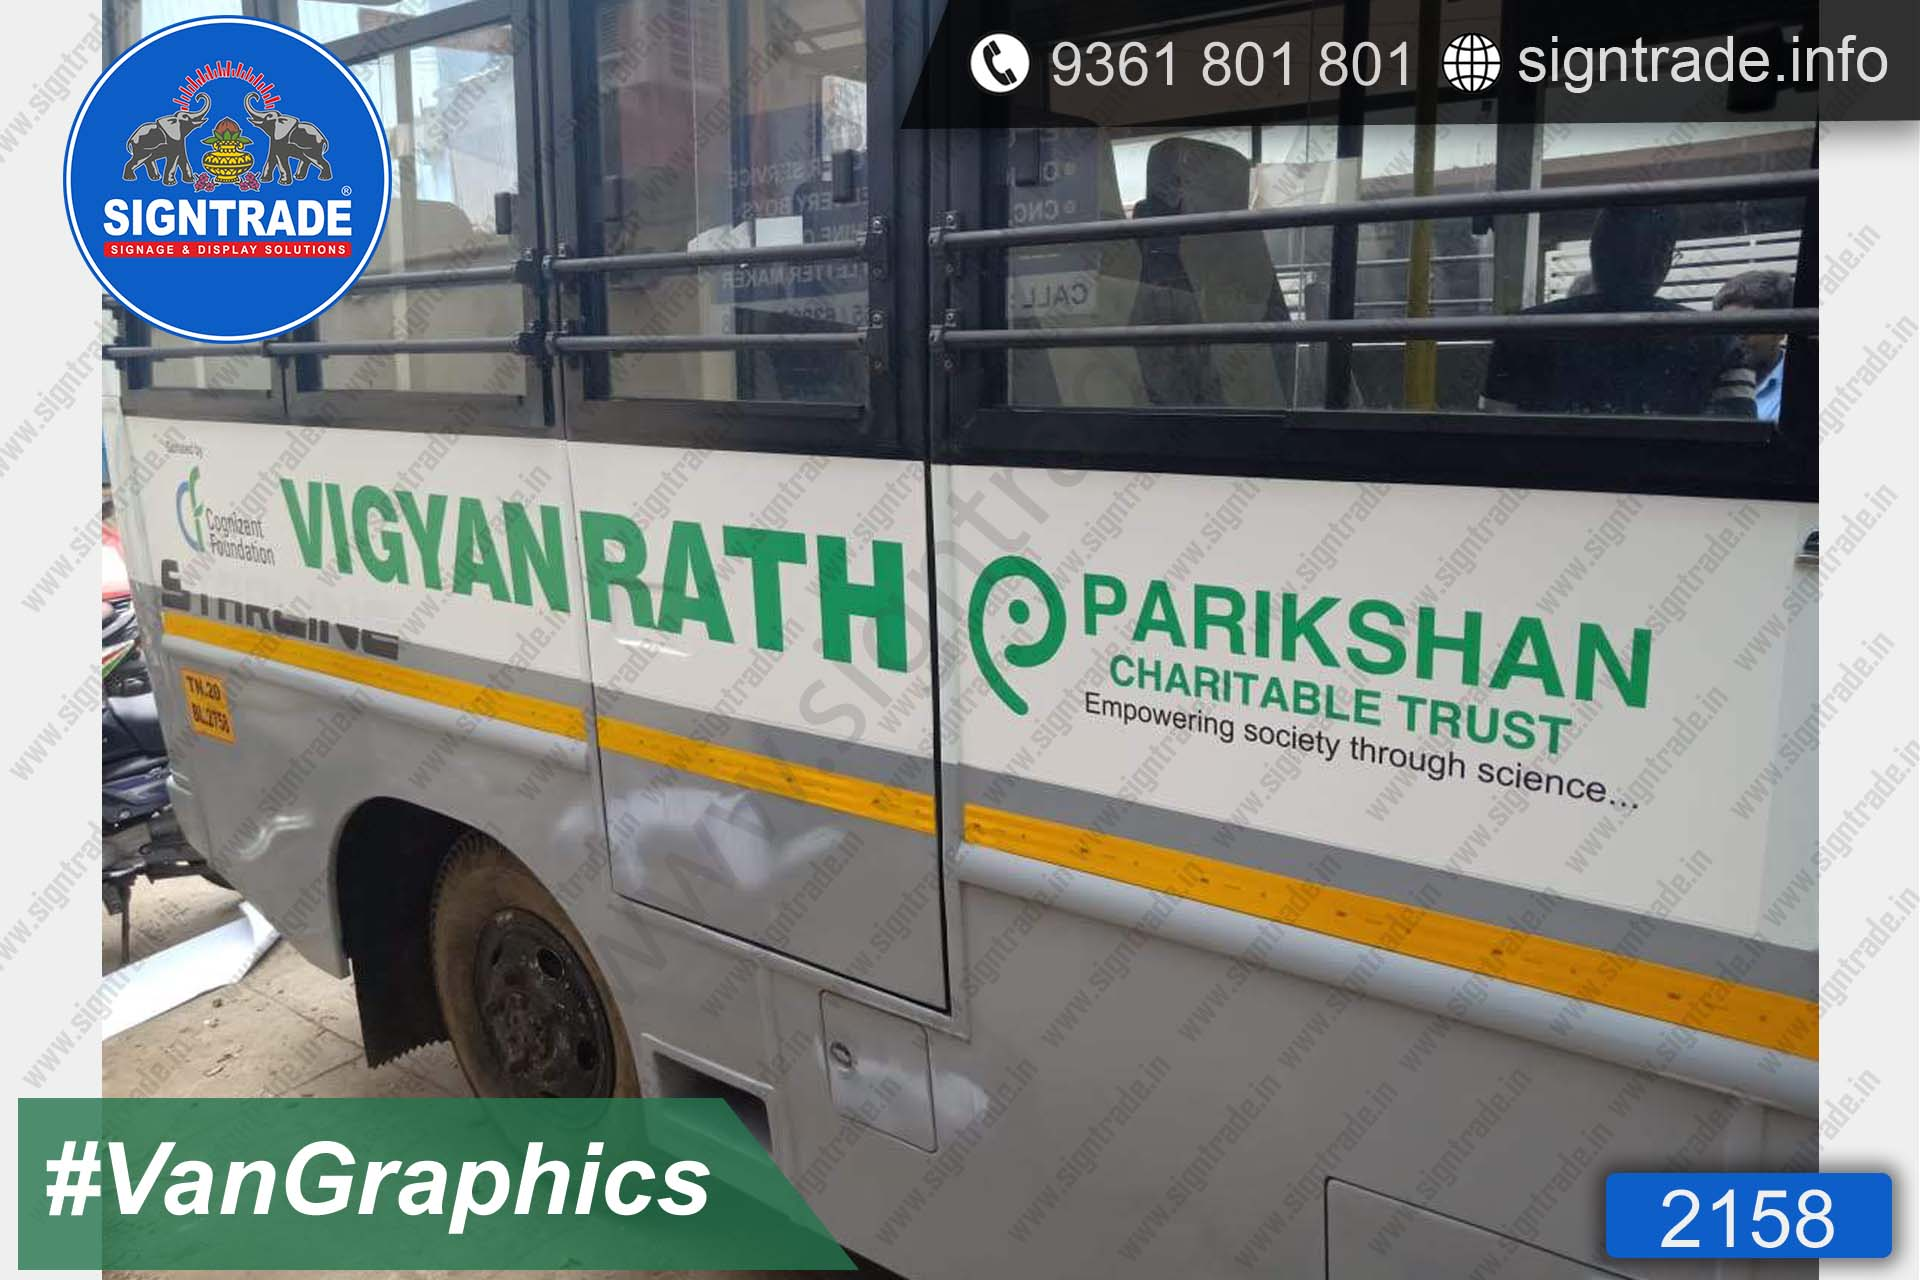 Parikshan Charitable Trust Van Graphics